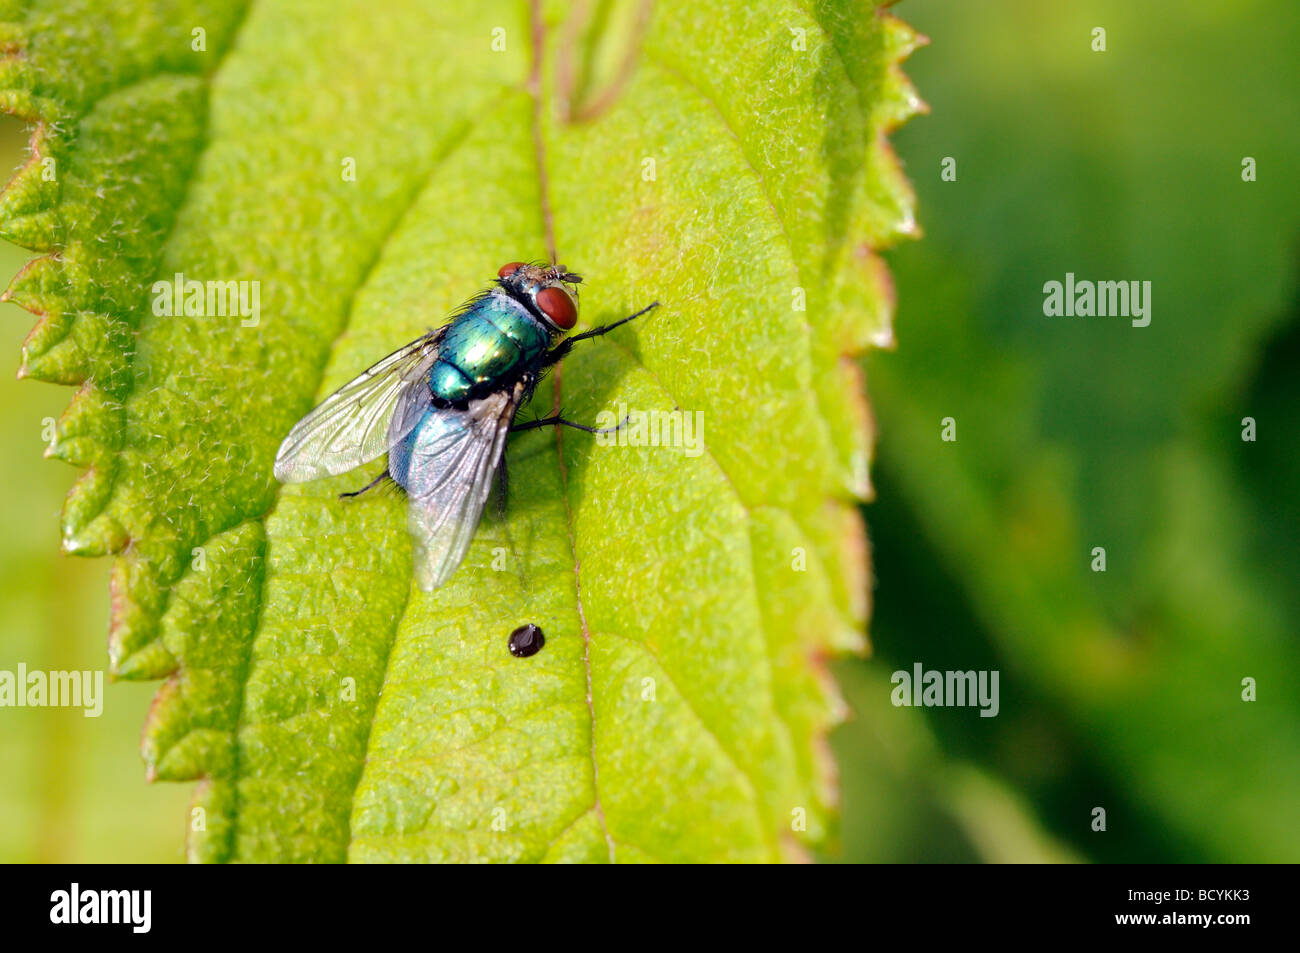 Blowfly sitting on a plant leaf Stock Photo